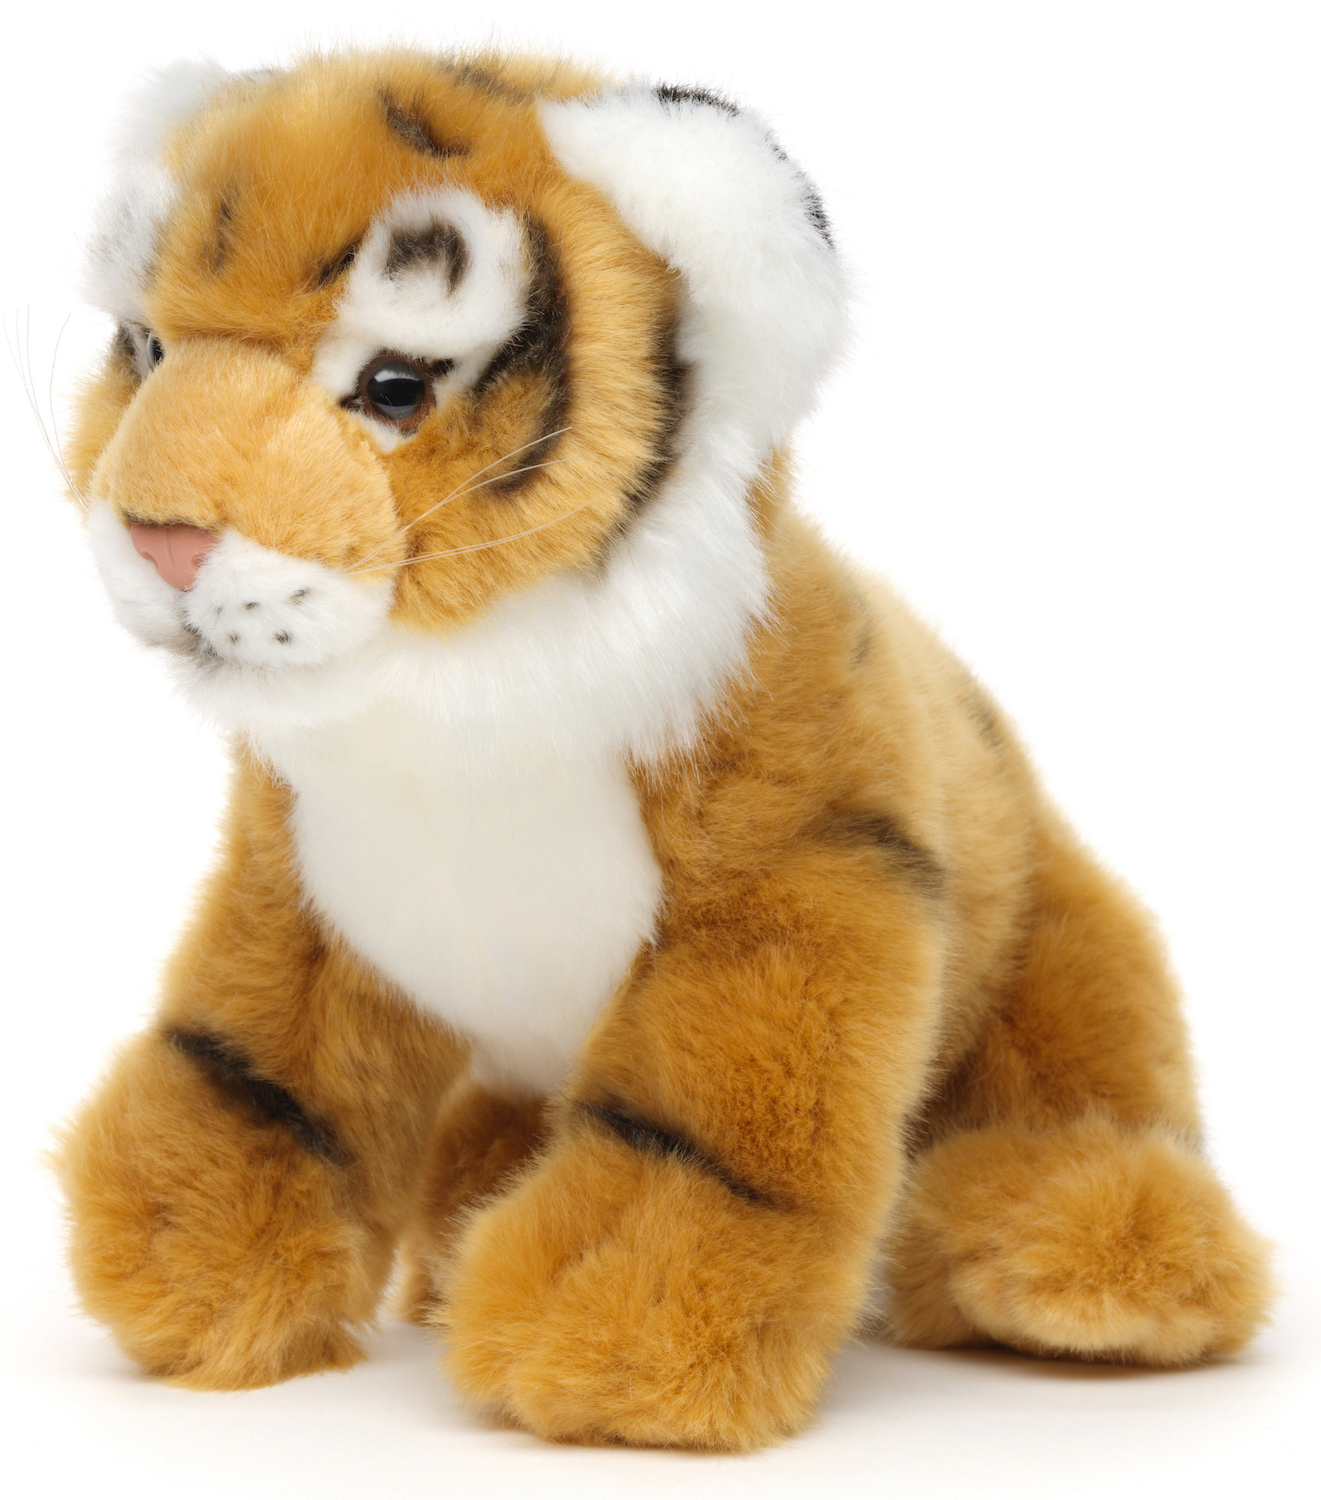 Tiger Baby, sitting - 24 cm (length)